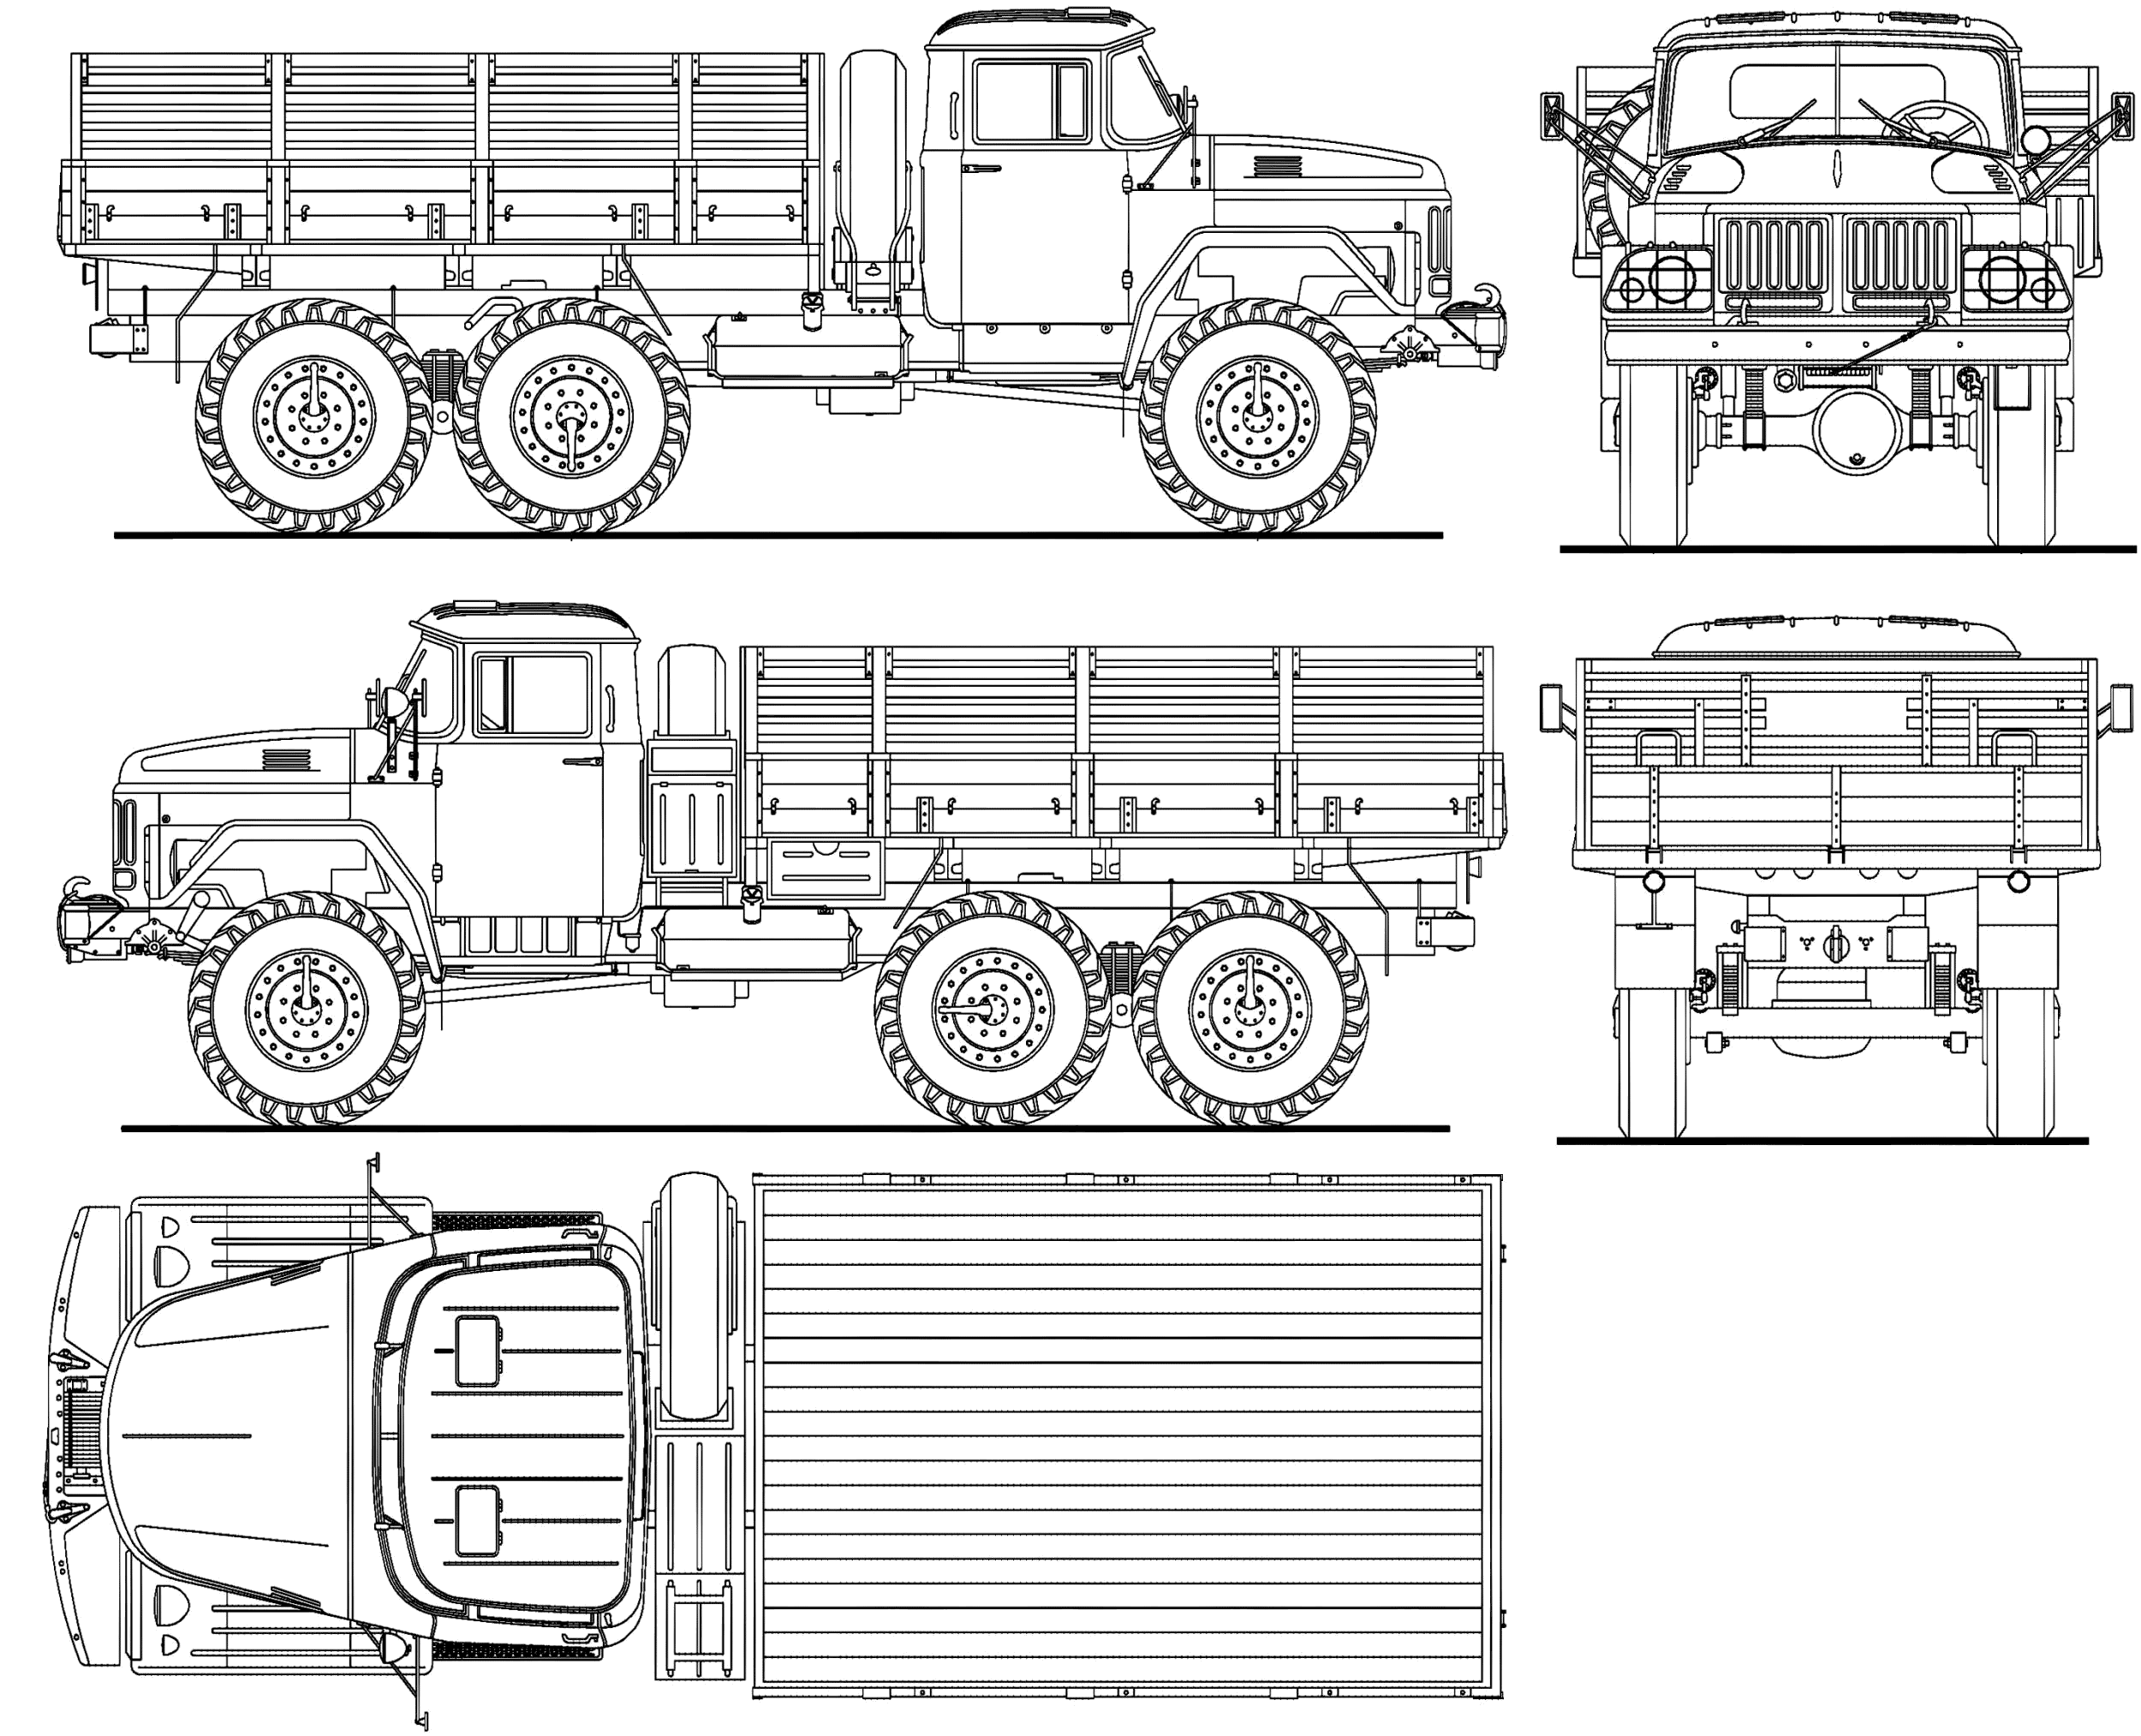 1966 ZIL 131 Heavy Truck v4 blueprints free - Outlines